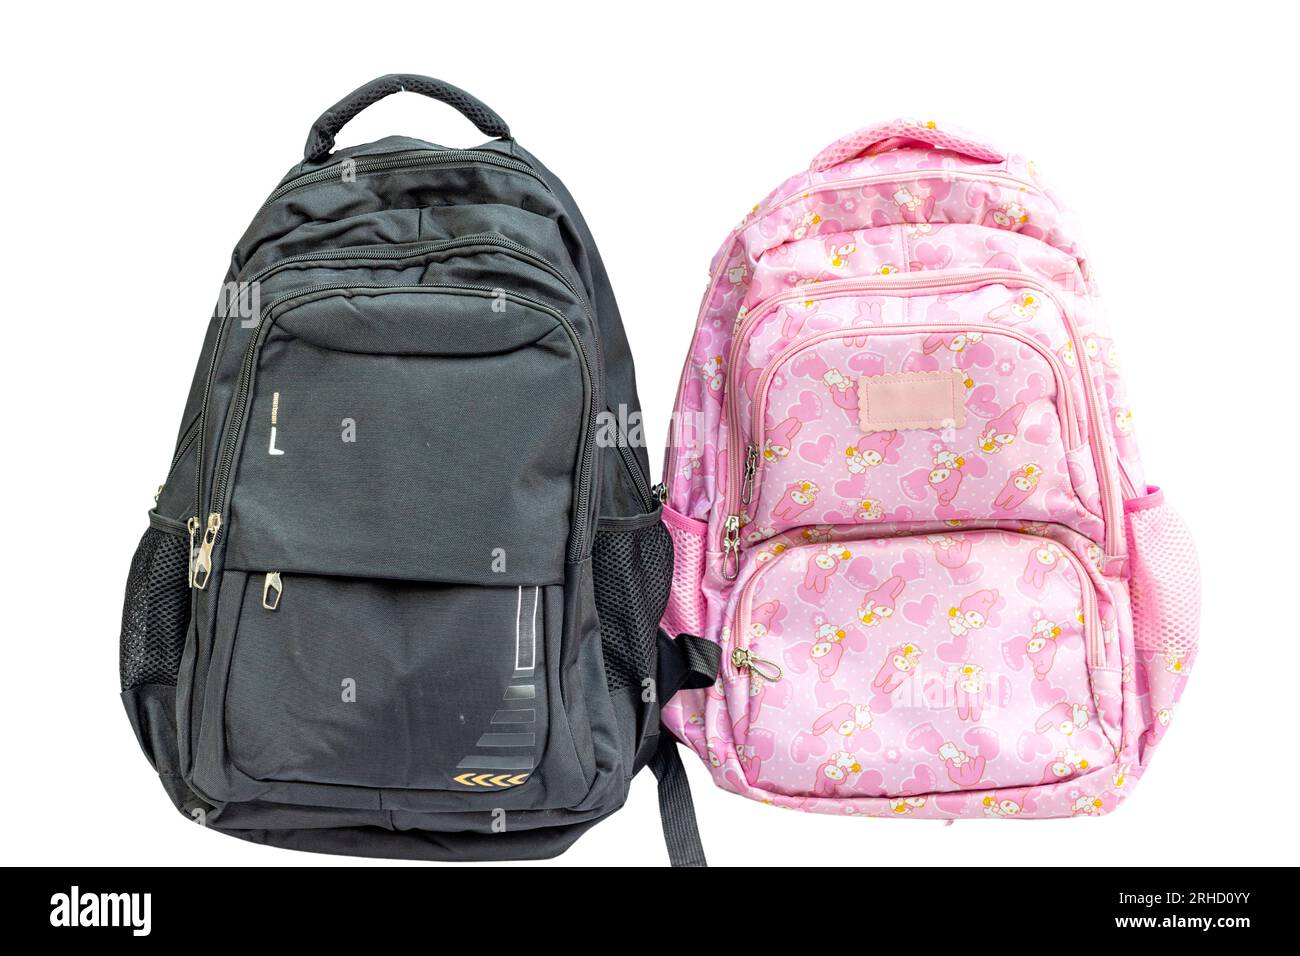 Boys and girls theme backpacks isolated on white background Stock Photo